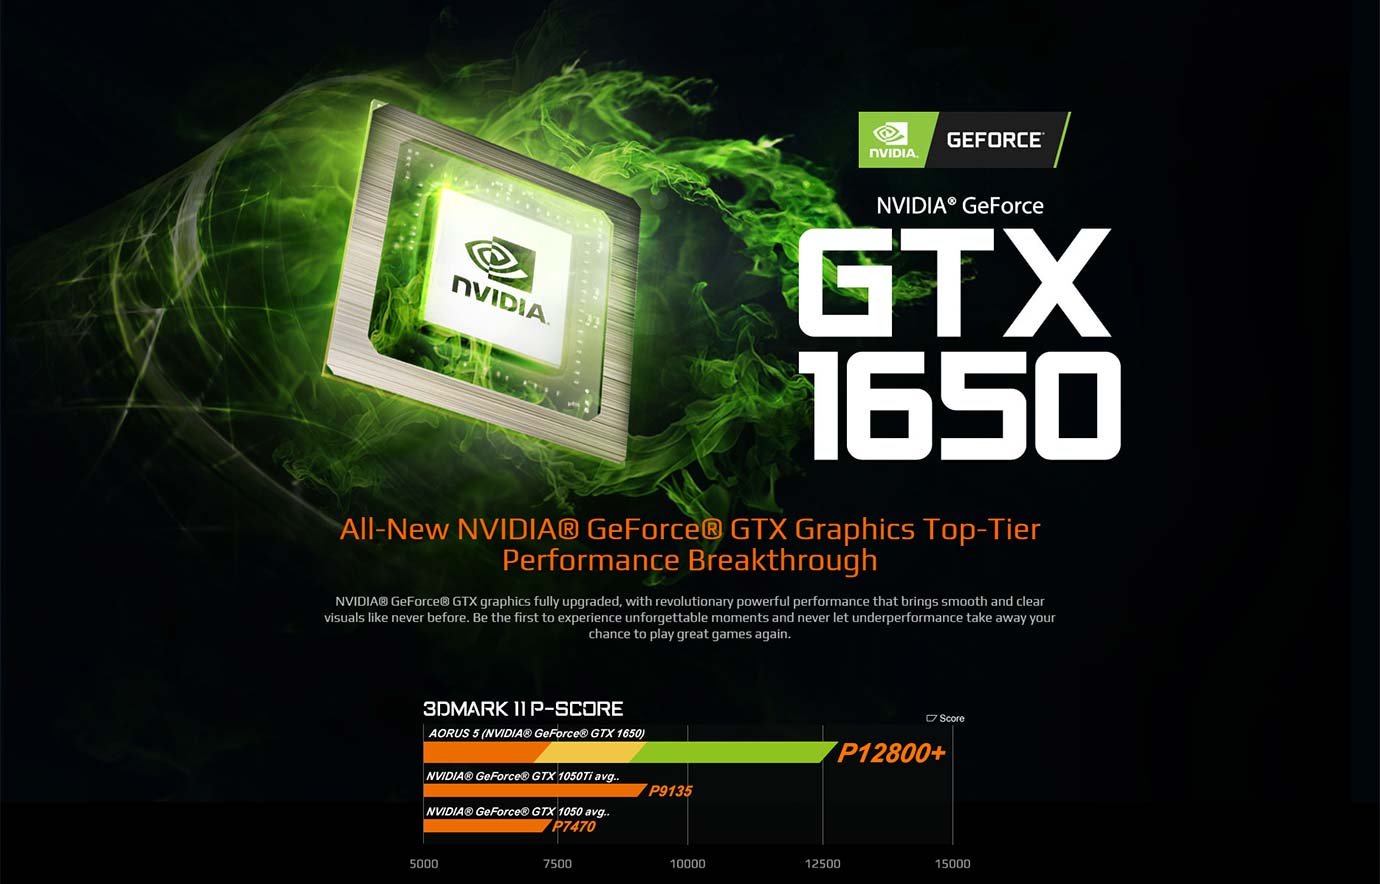 All-New NVIDIA® GeForce® GTX Graphics